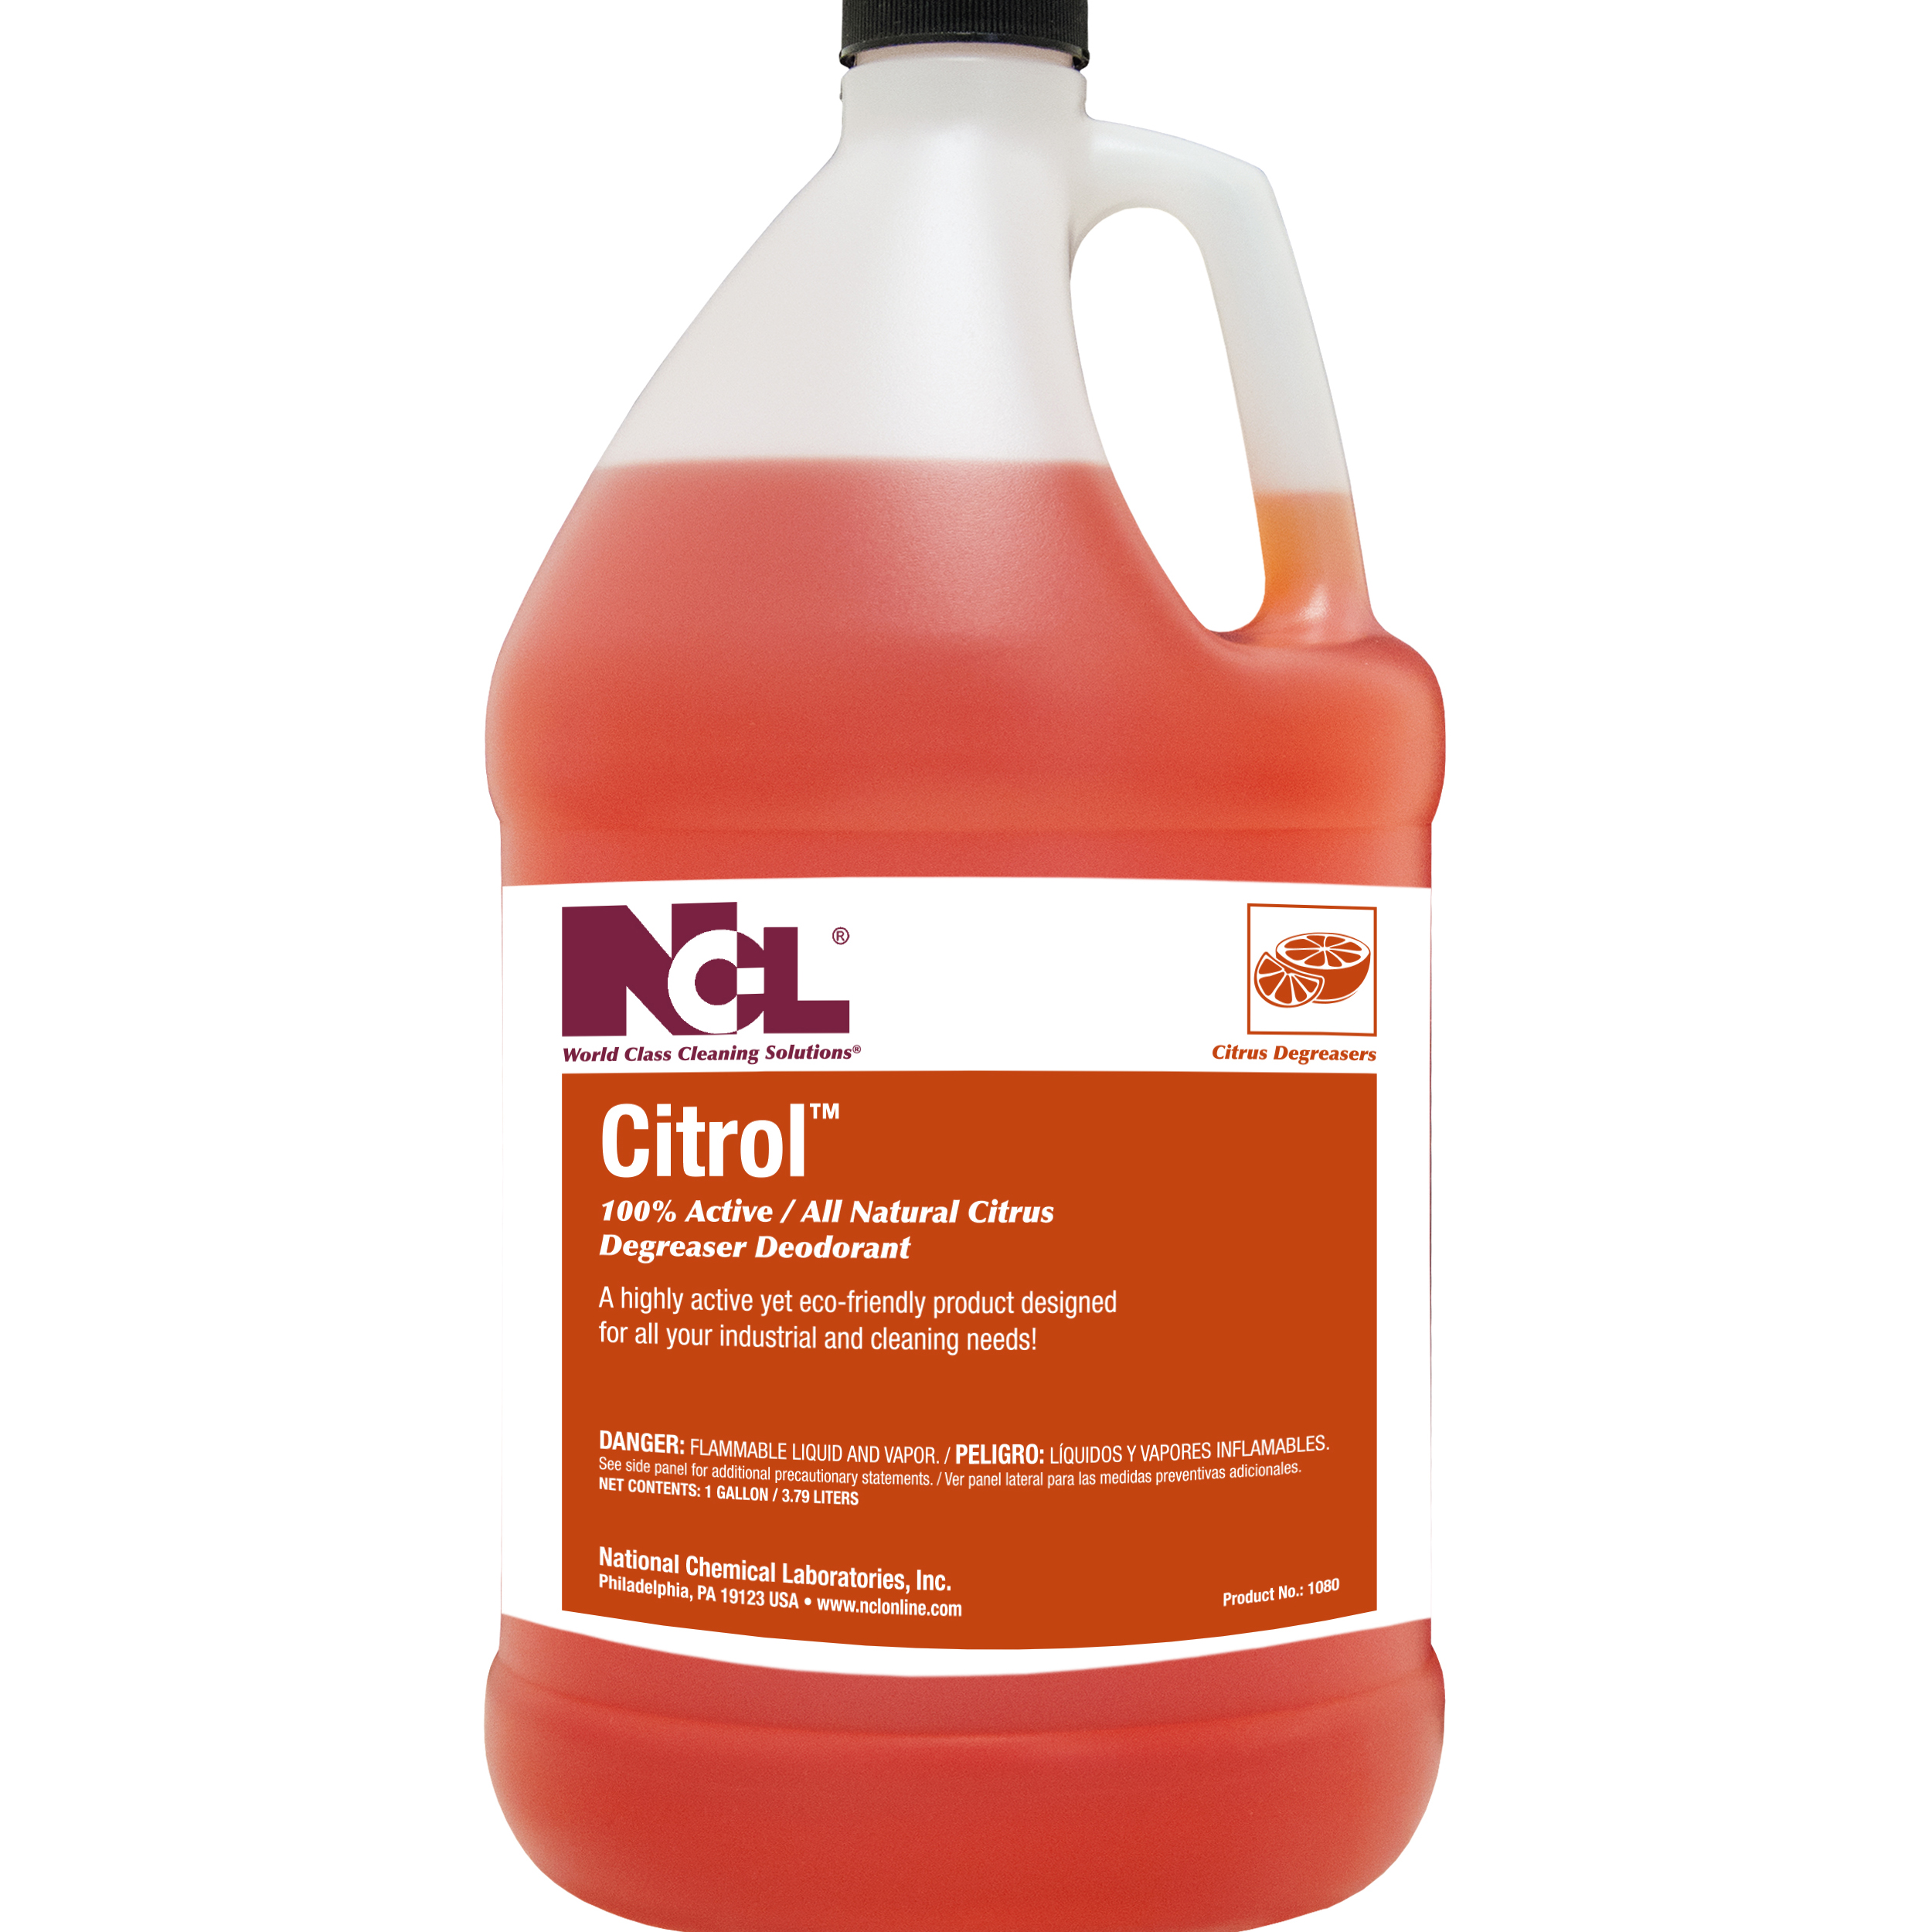  CITROL 100% Active / All Natural Citrus Degreaser Deodorant 4/1 Gal. Case (NCL1080-14) 